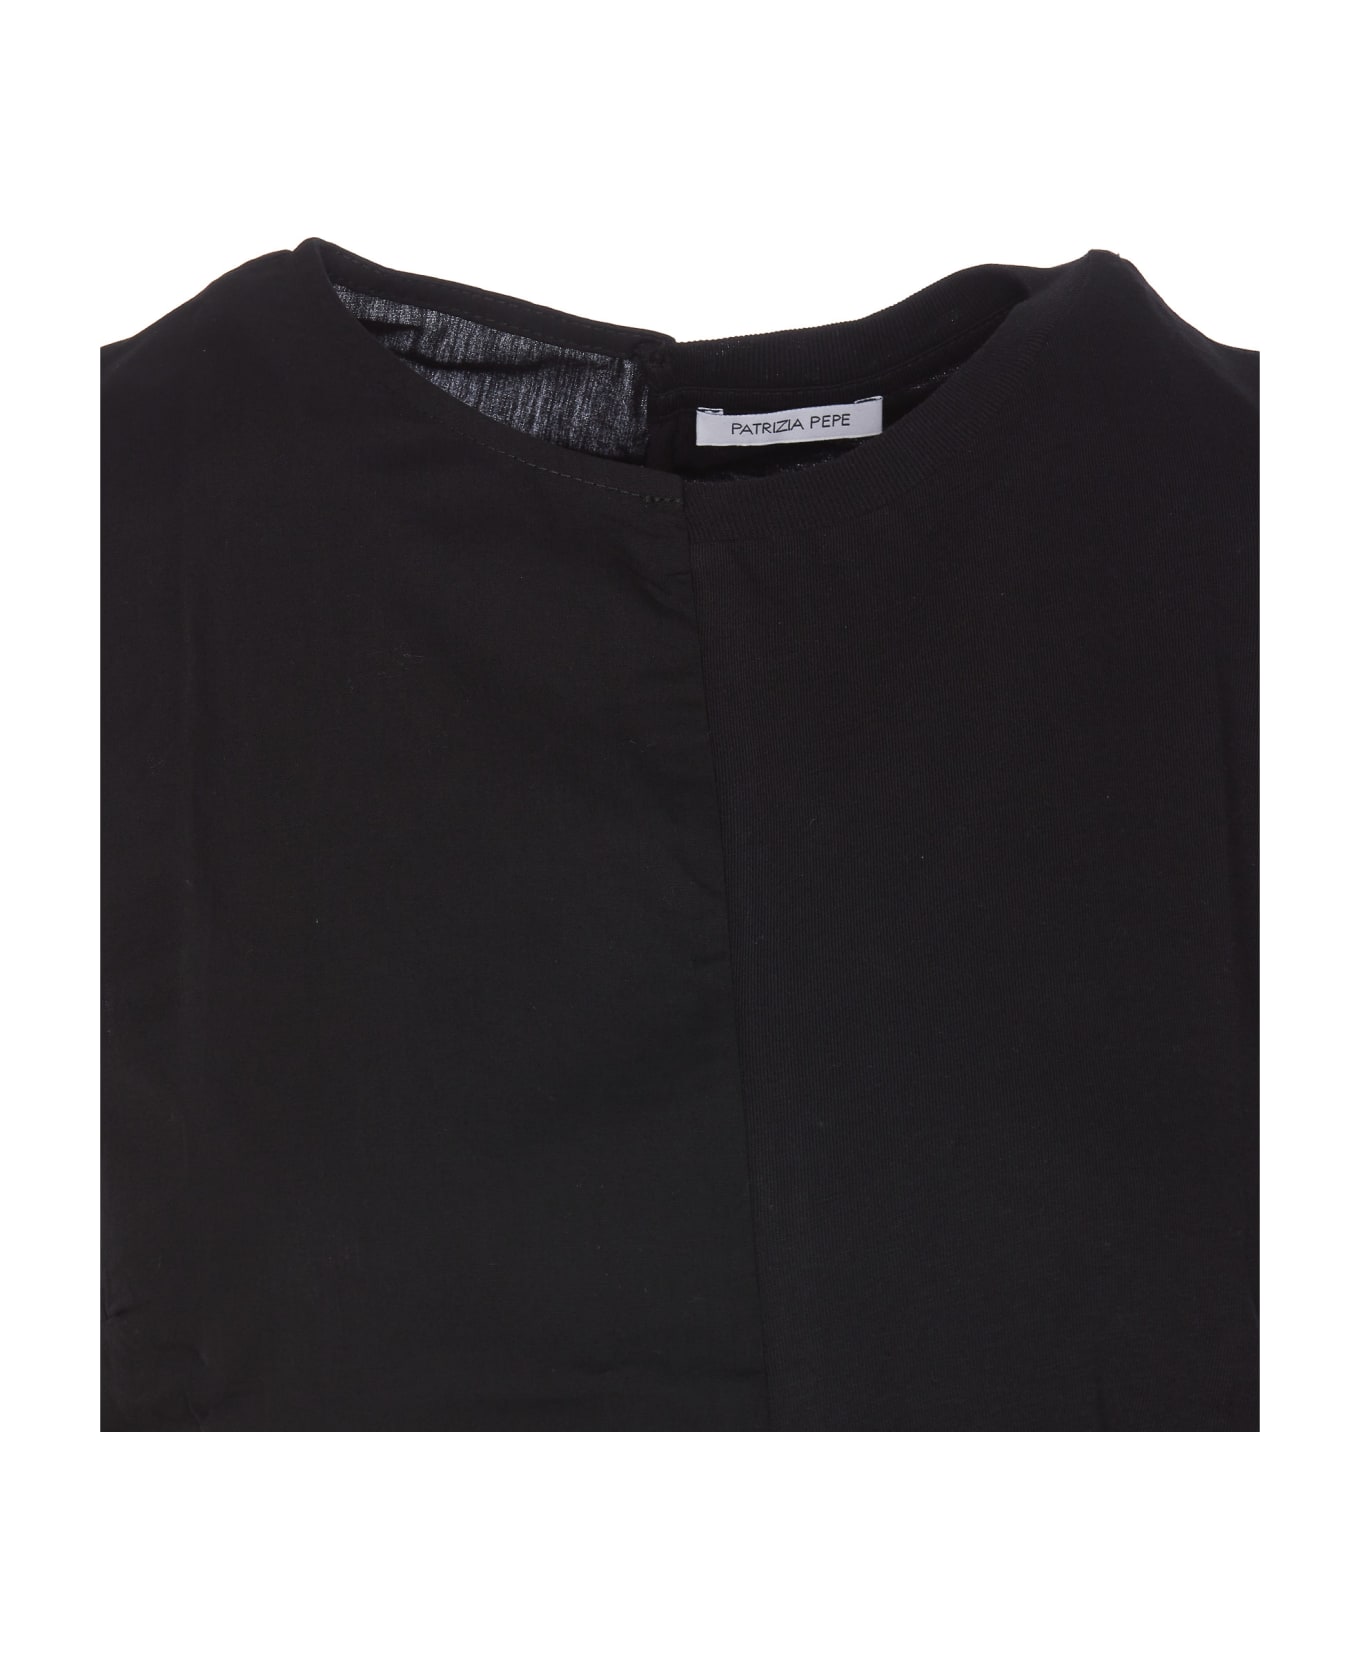 Patrizia Pepe Top - Black Tシャツ